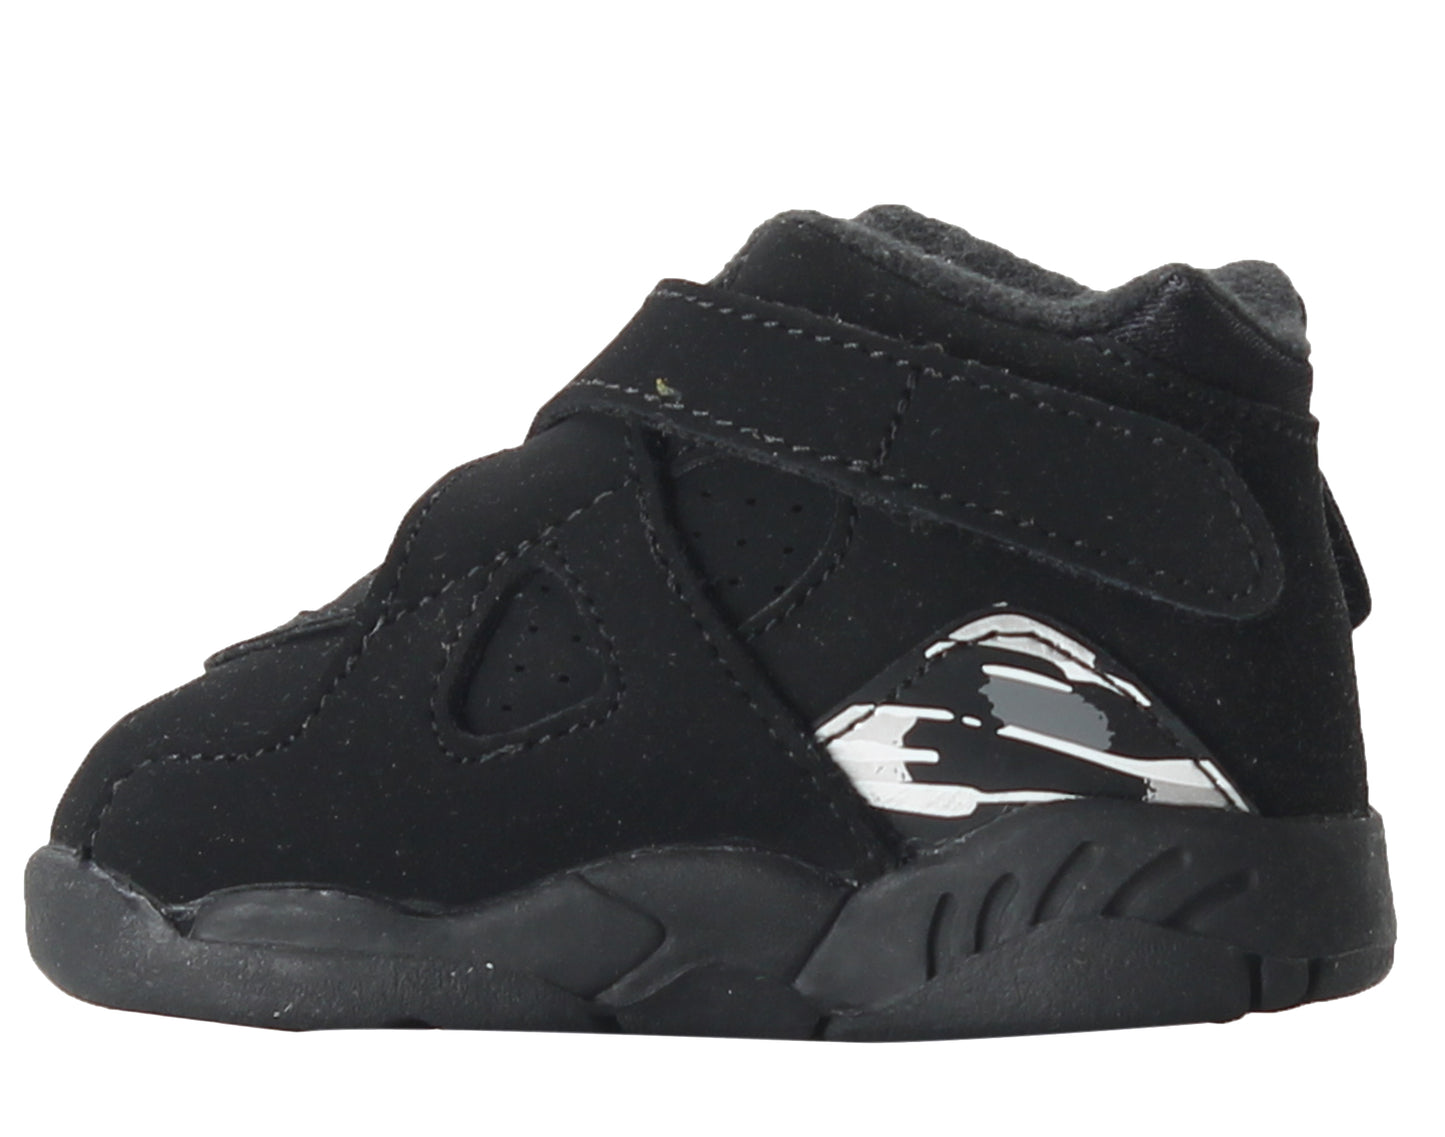 Nike Air Jordan 8 Retro BT (TD) Chrome Toddler Boys Basketball Shoes 305360-003